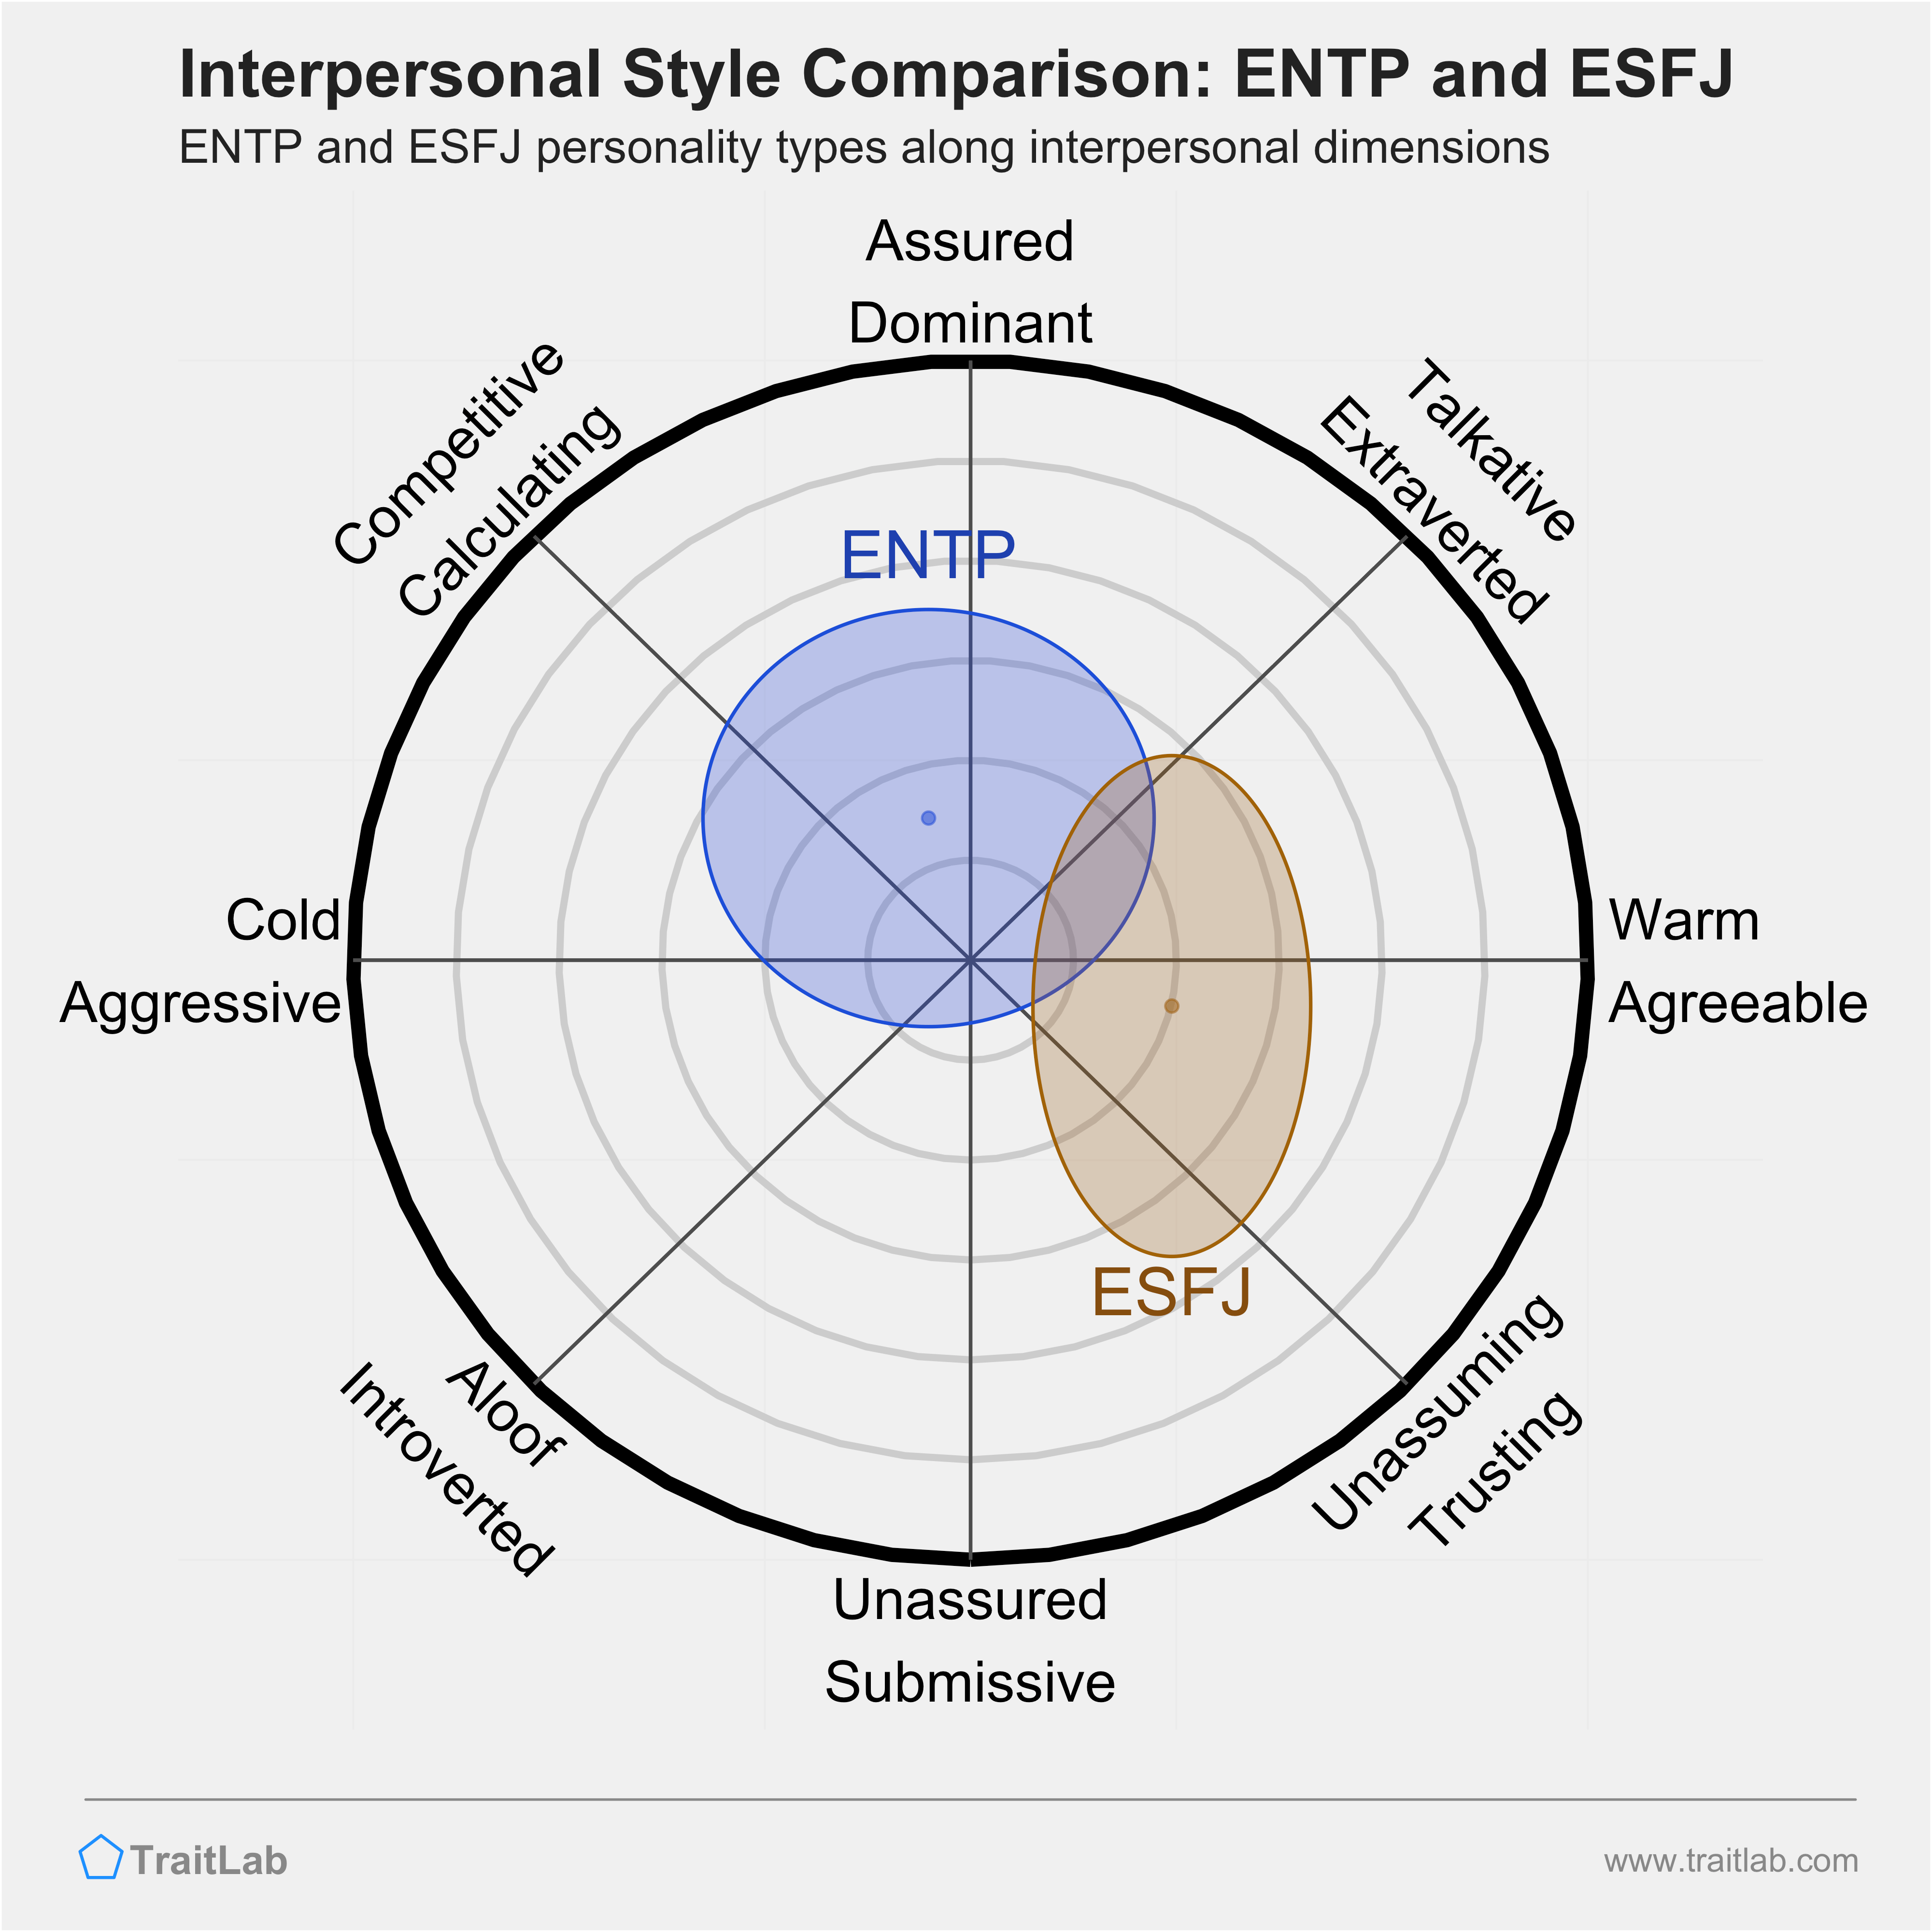 ENTP and ESFJ comparison across interpersonal dimensions